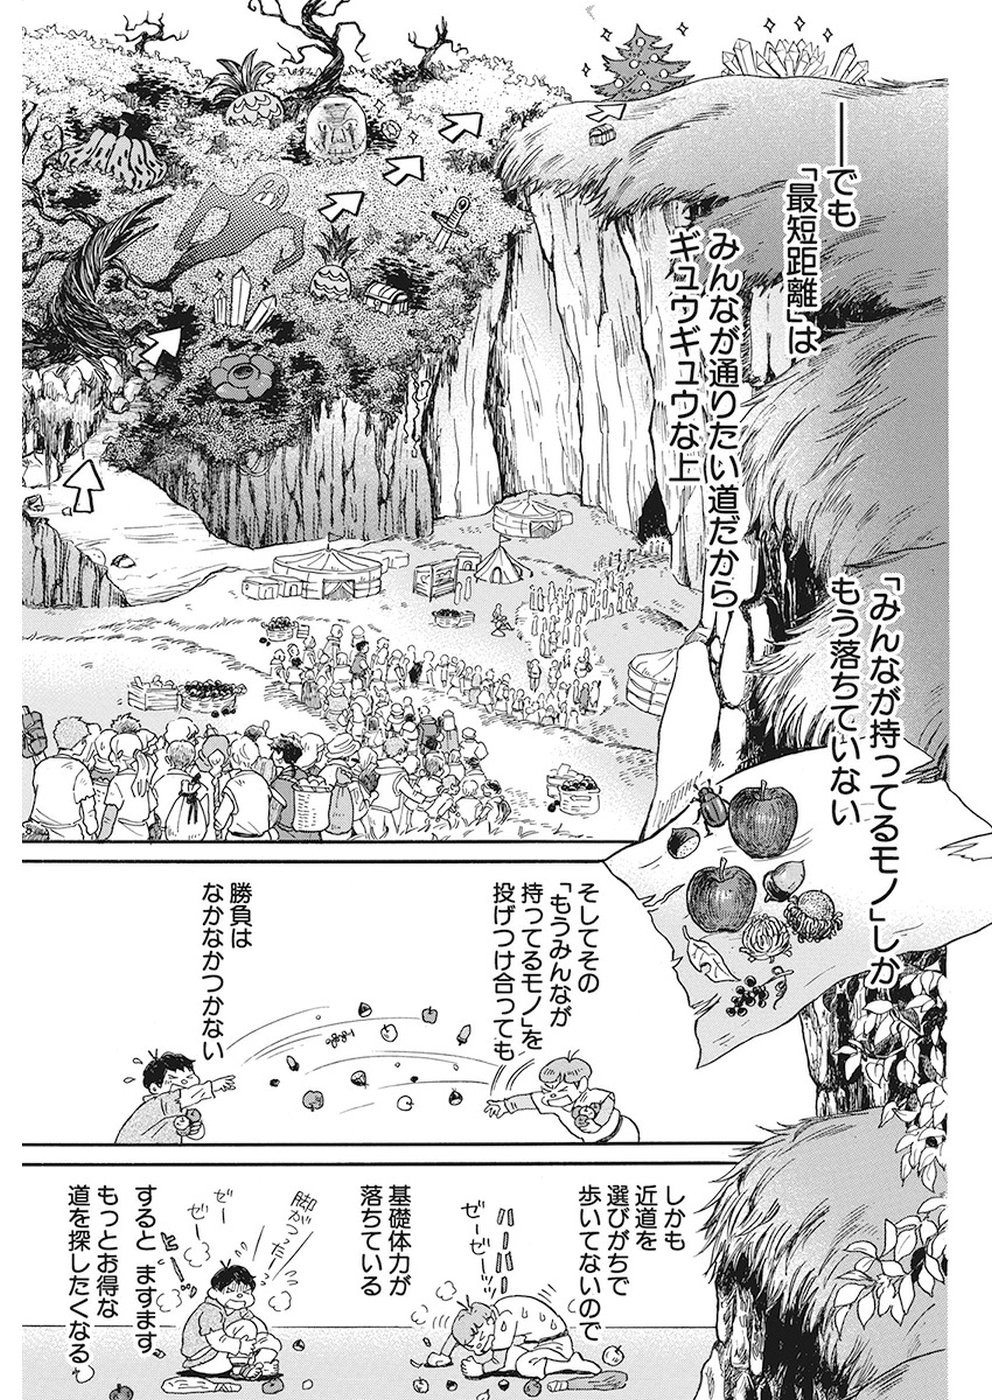 3 Gatsu no Lion - Chapter 159 - Page 3